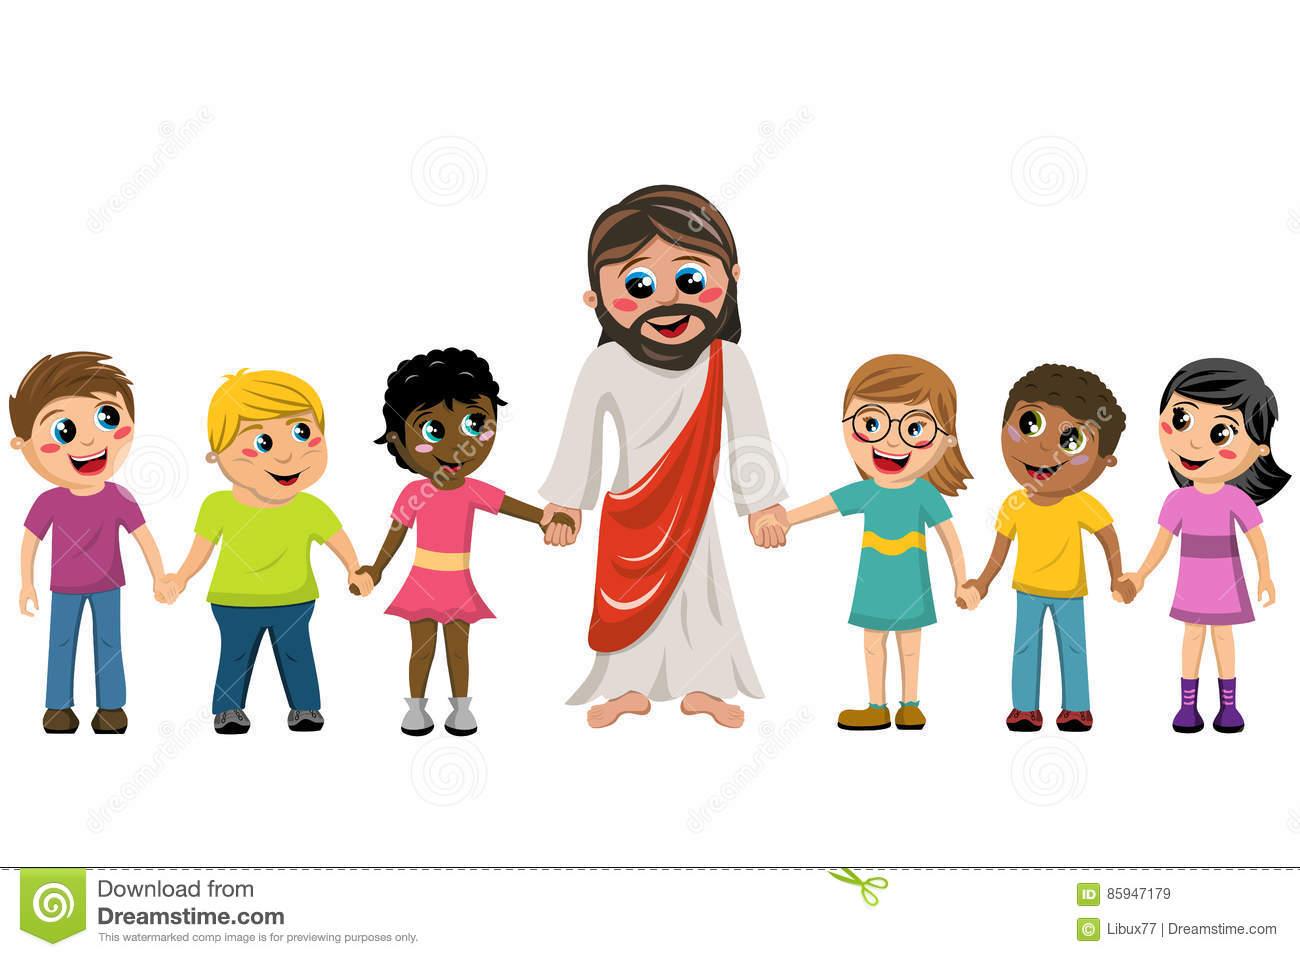 Cartoon Jesus hand in hand kids children